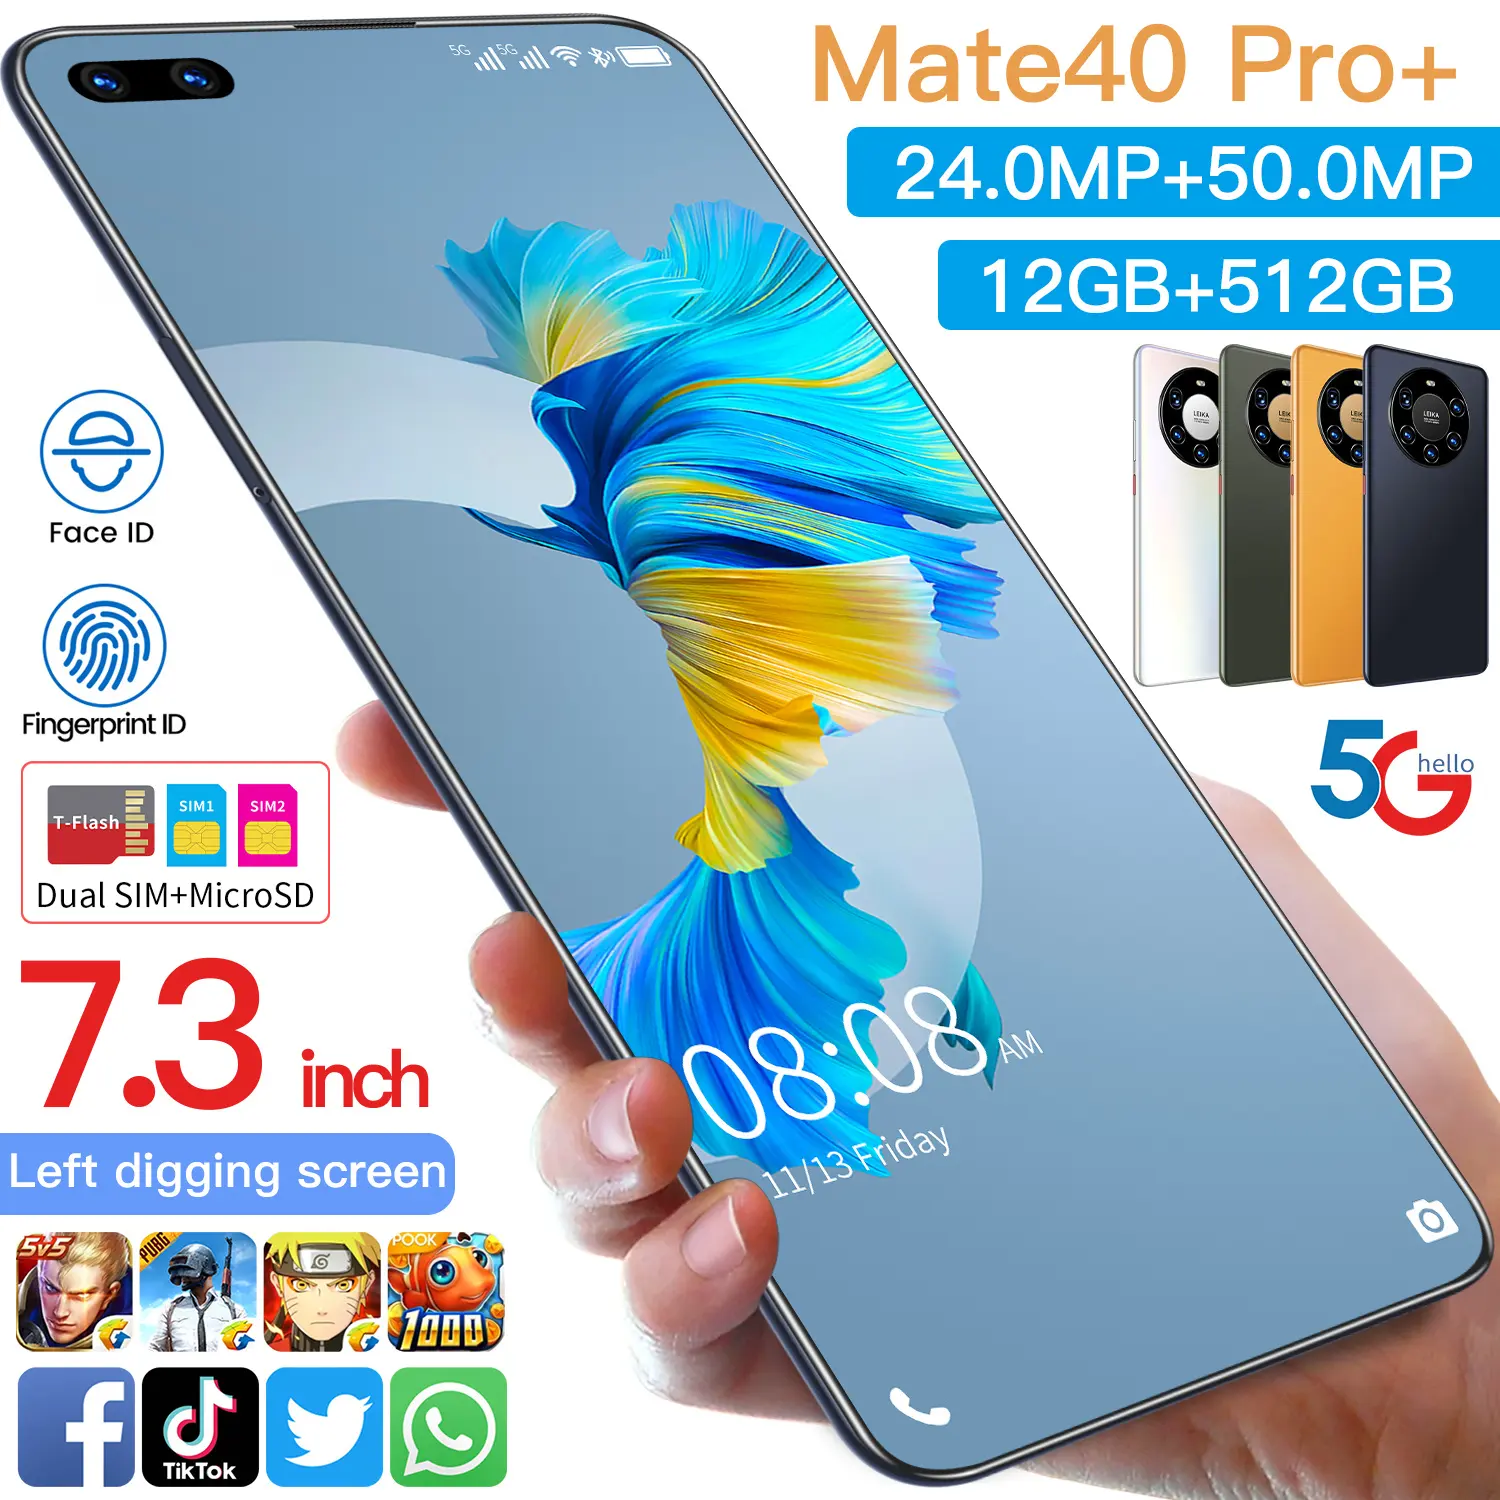 Sıcak satış Mate 40 Pro + orijinal 12gb + 512gb cep telefonu + 50mp yüz kilidini tam ekran Android 10.0 akıllı cep telefonu